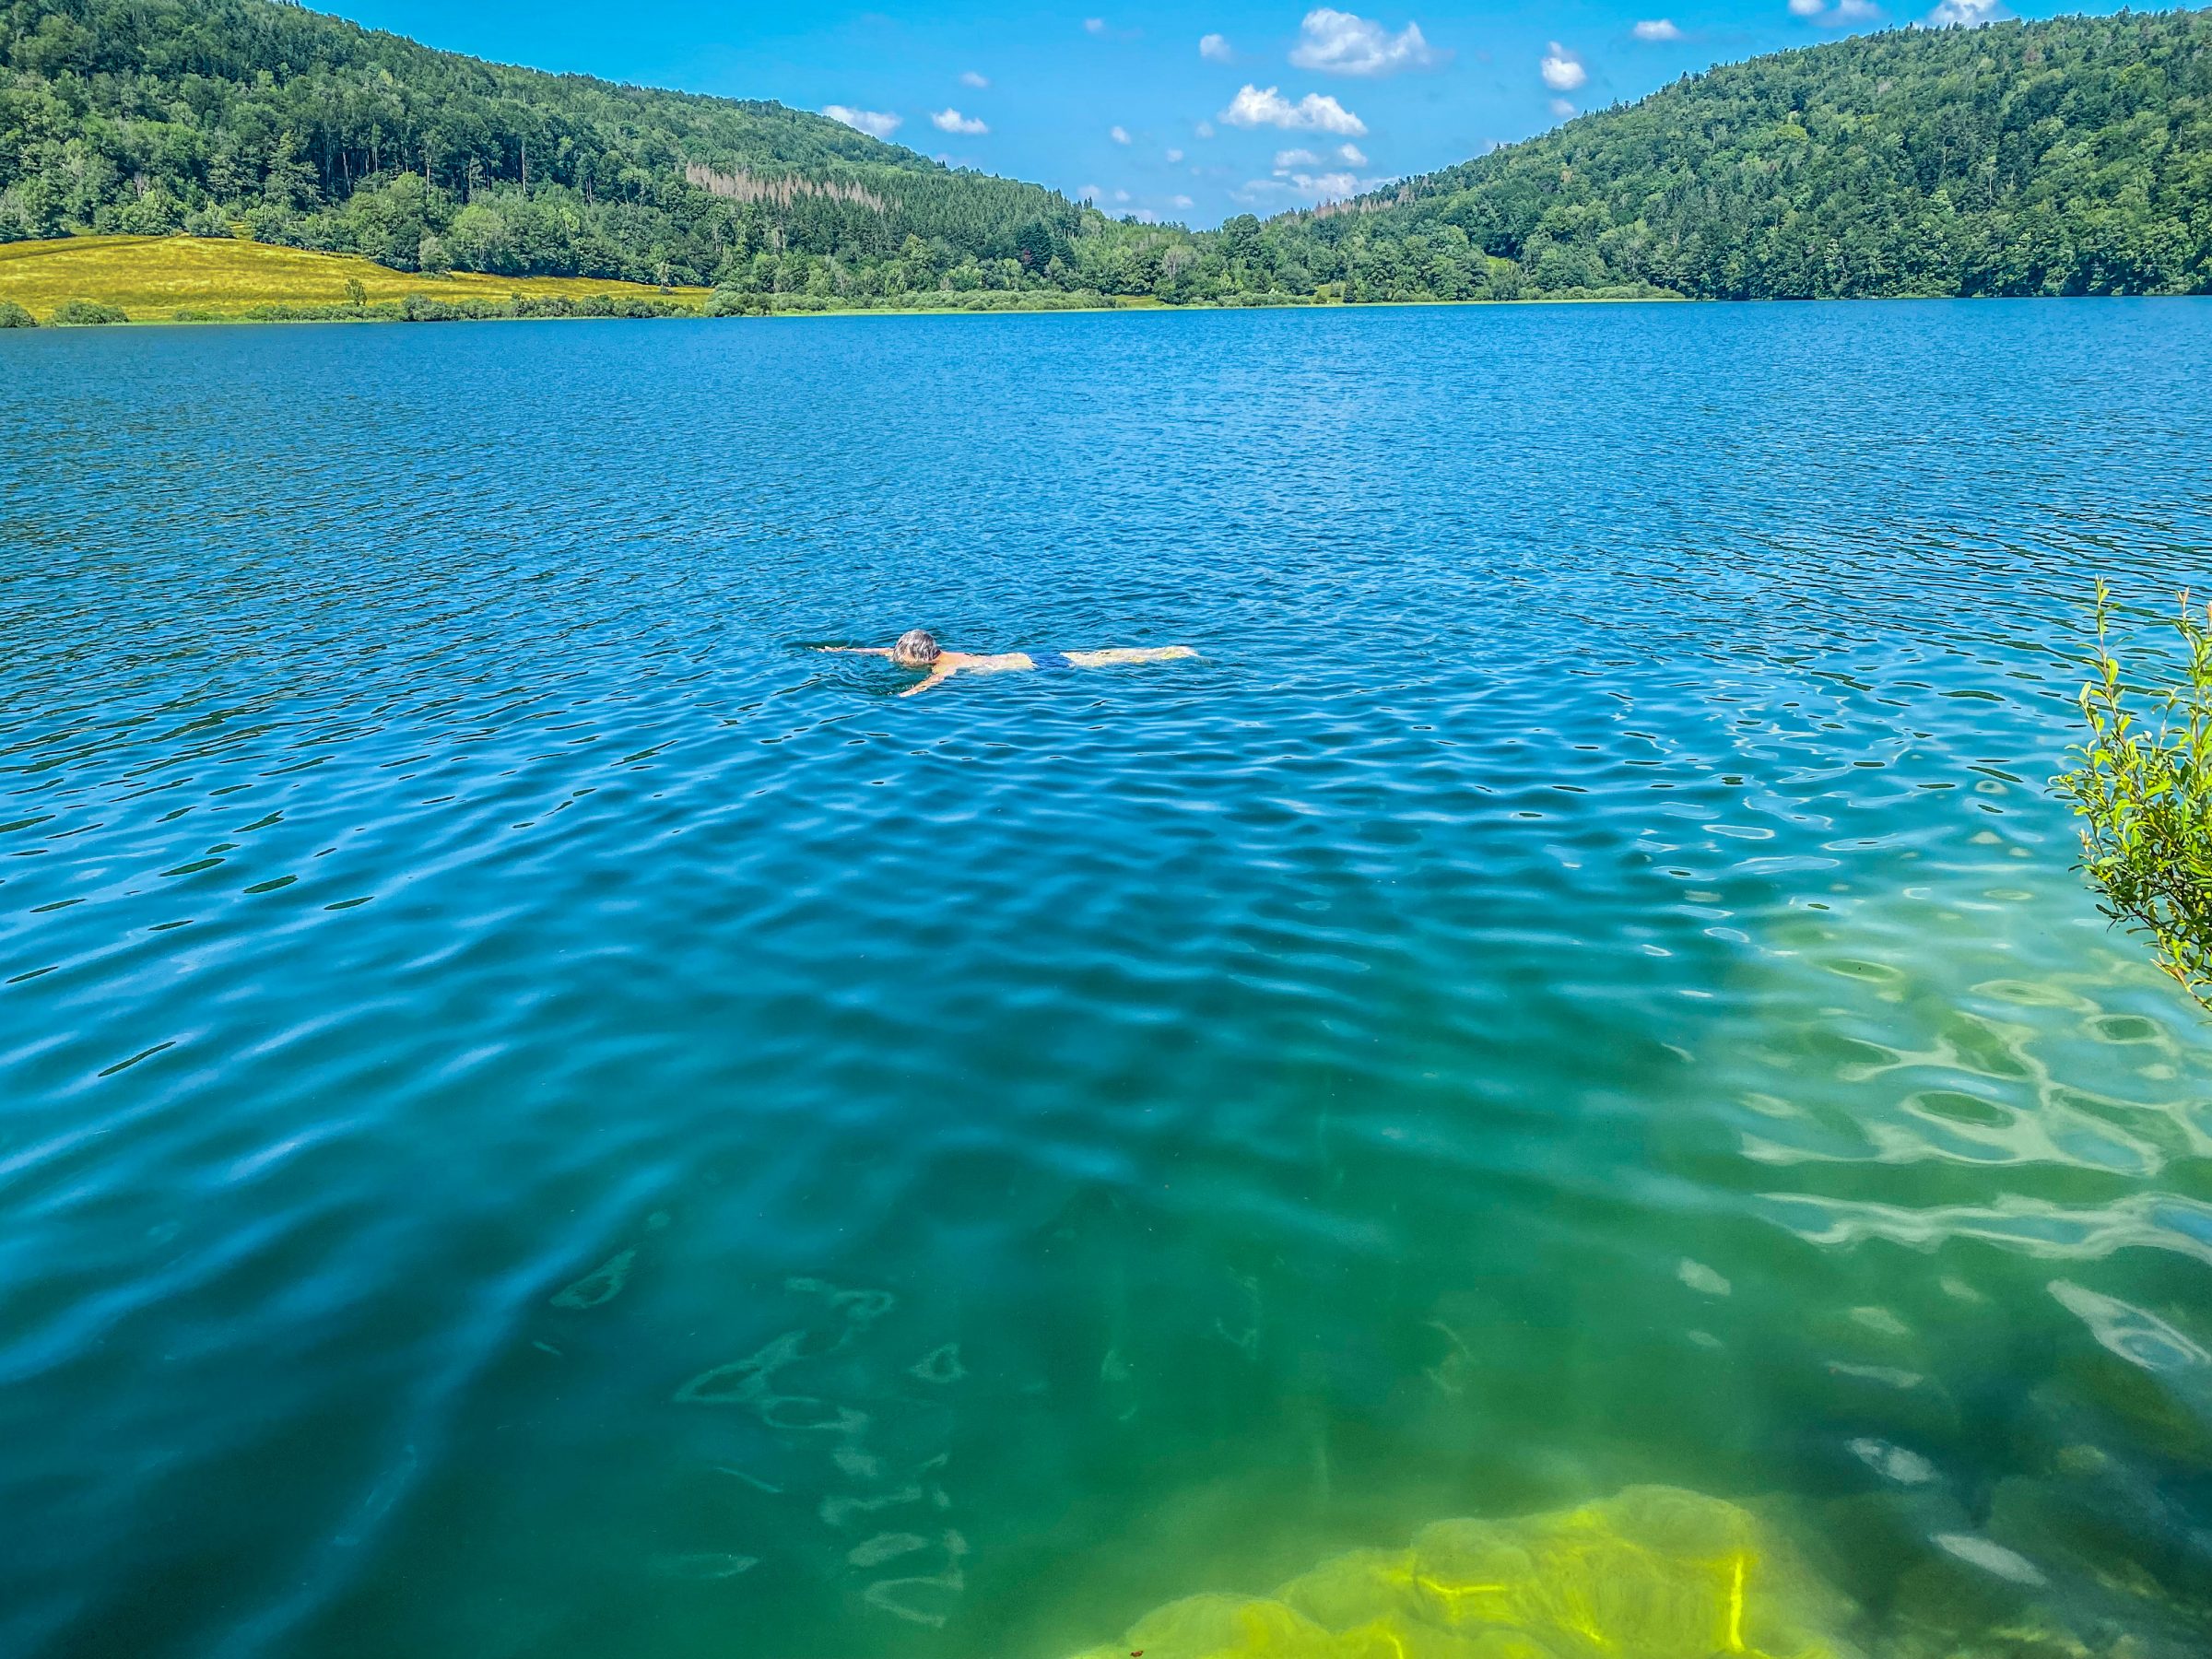 One unrecognizable person swim in the Narlay lake, Le Frasnois, Bourgogne-Franche-Comté, Jura